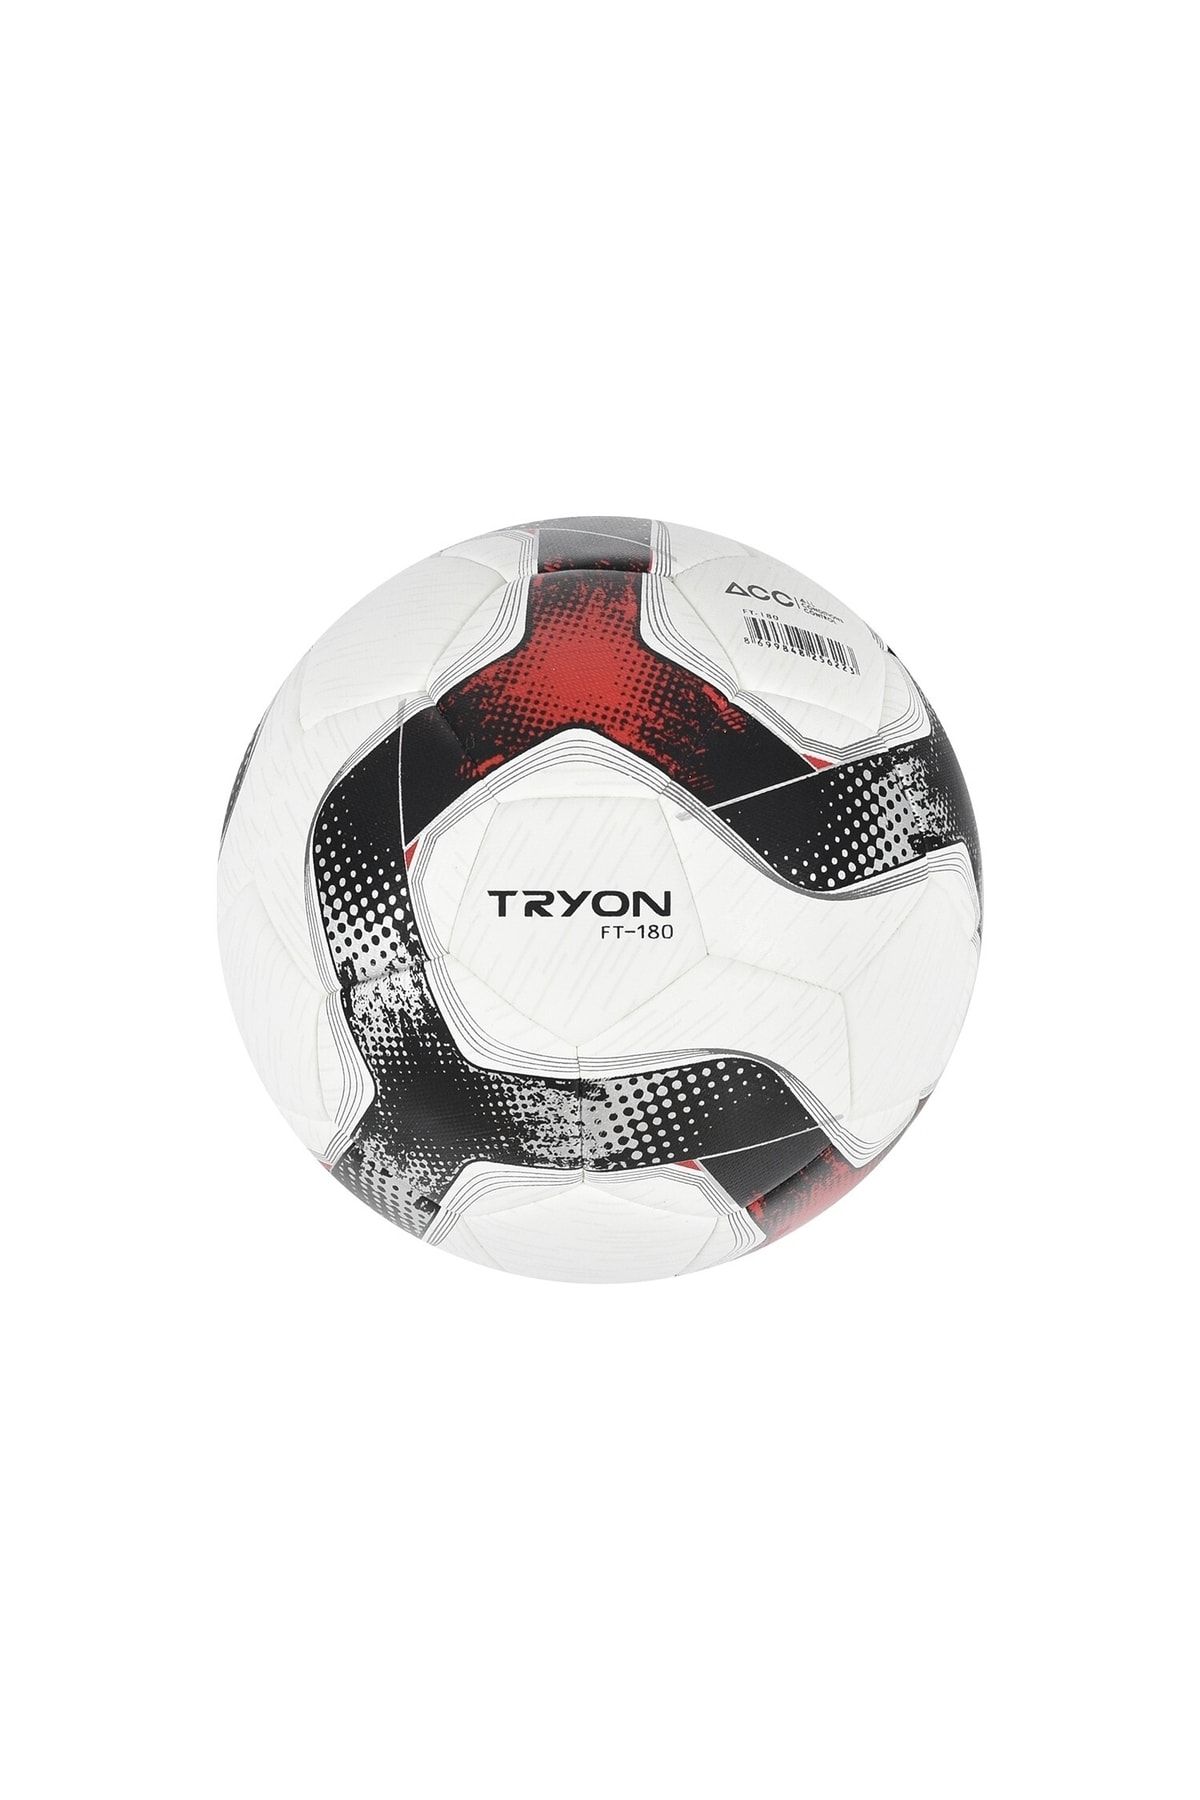 TRYON Ft-180 Futbol Topu (3 Numara)